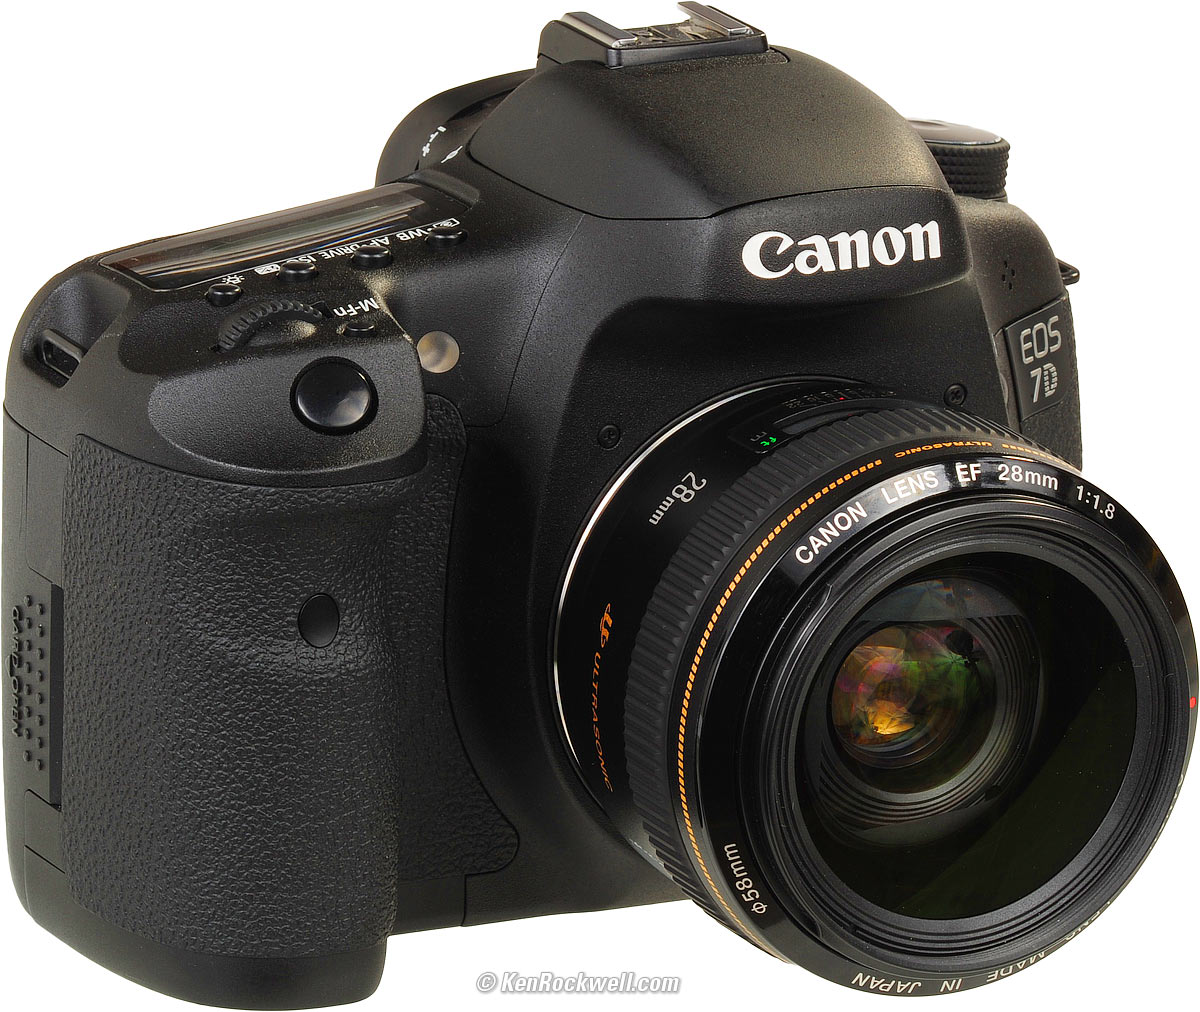 Canon 7D User's Guide